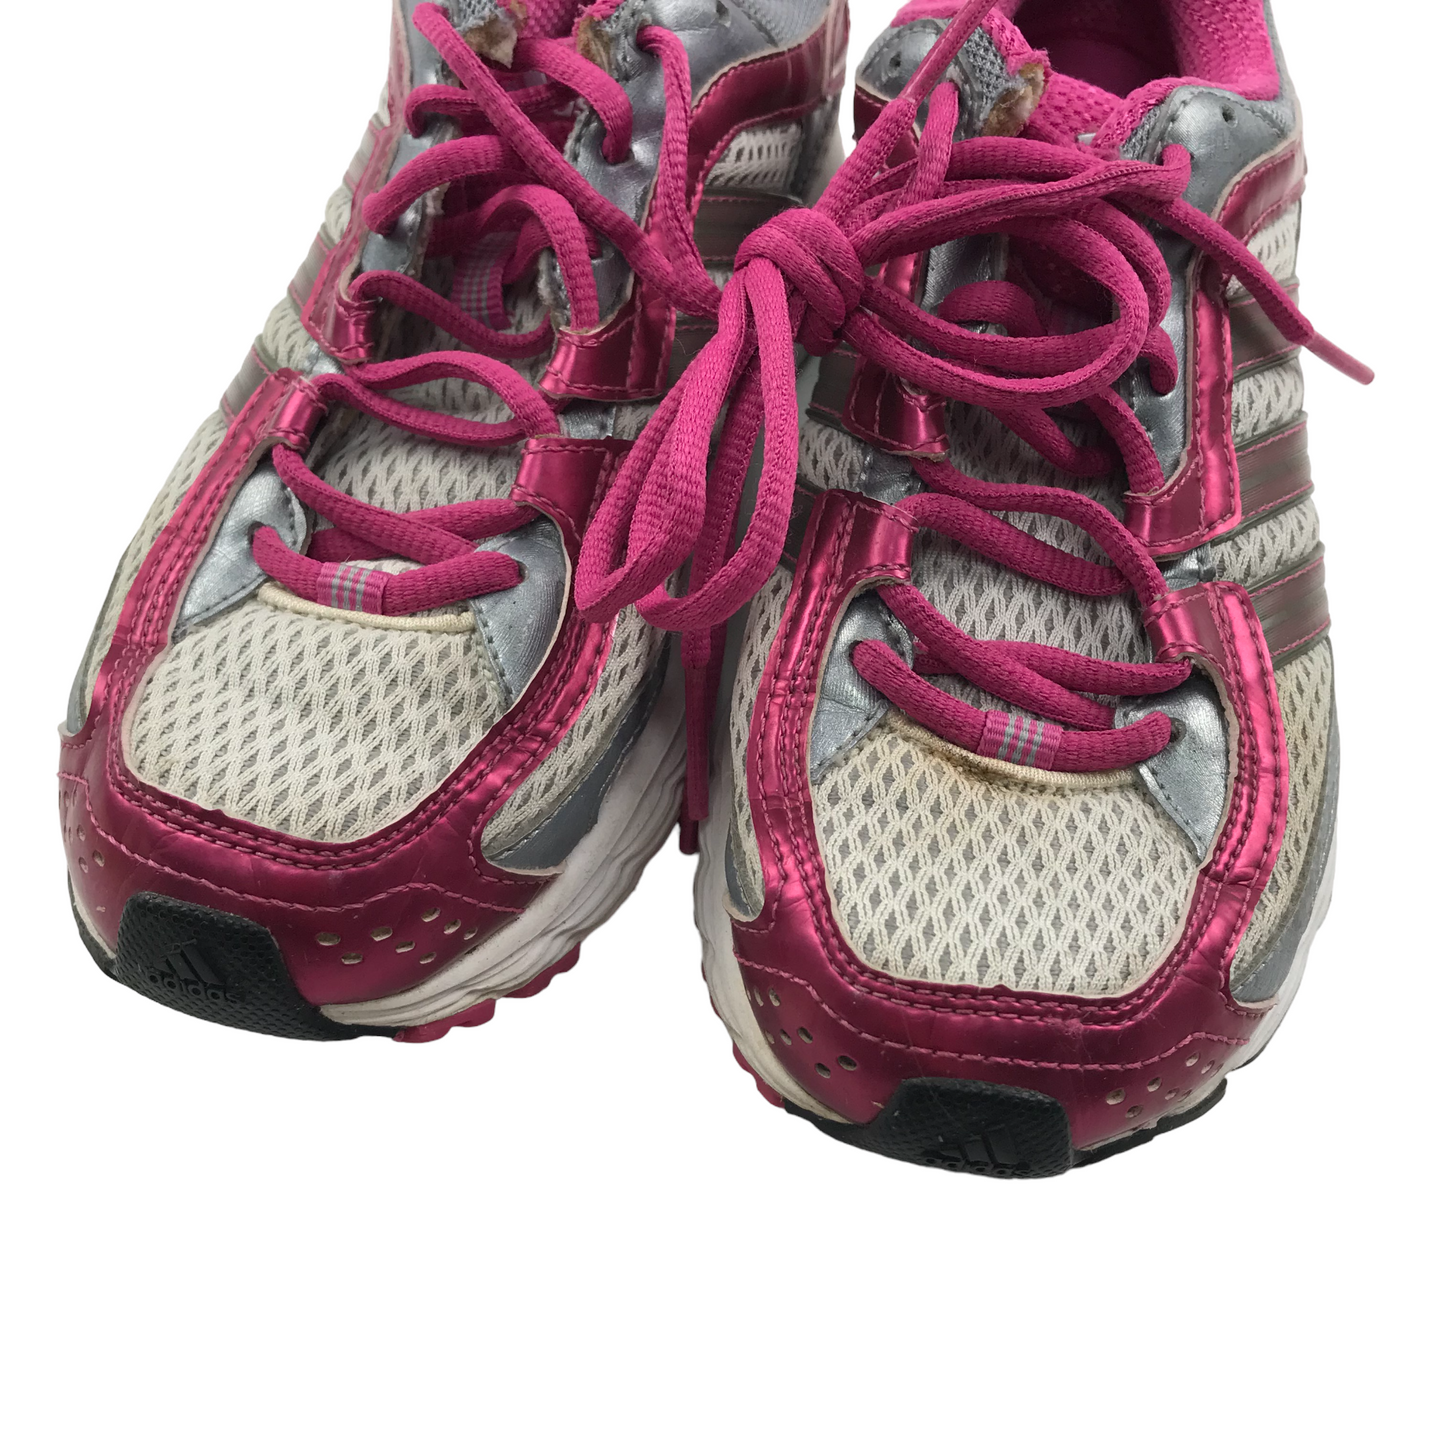 Adidas Adiprene Pink Running Trainers Shoe Size 4